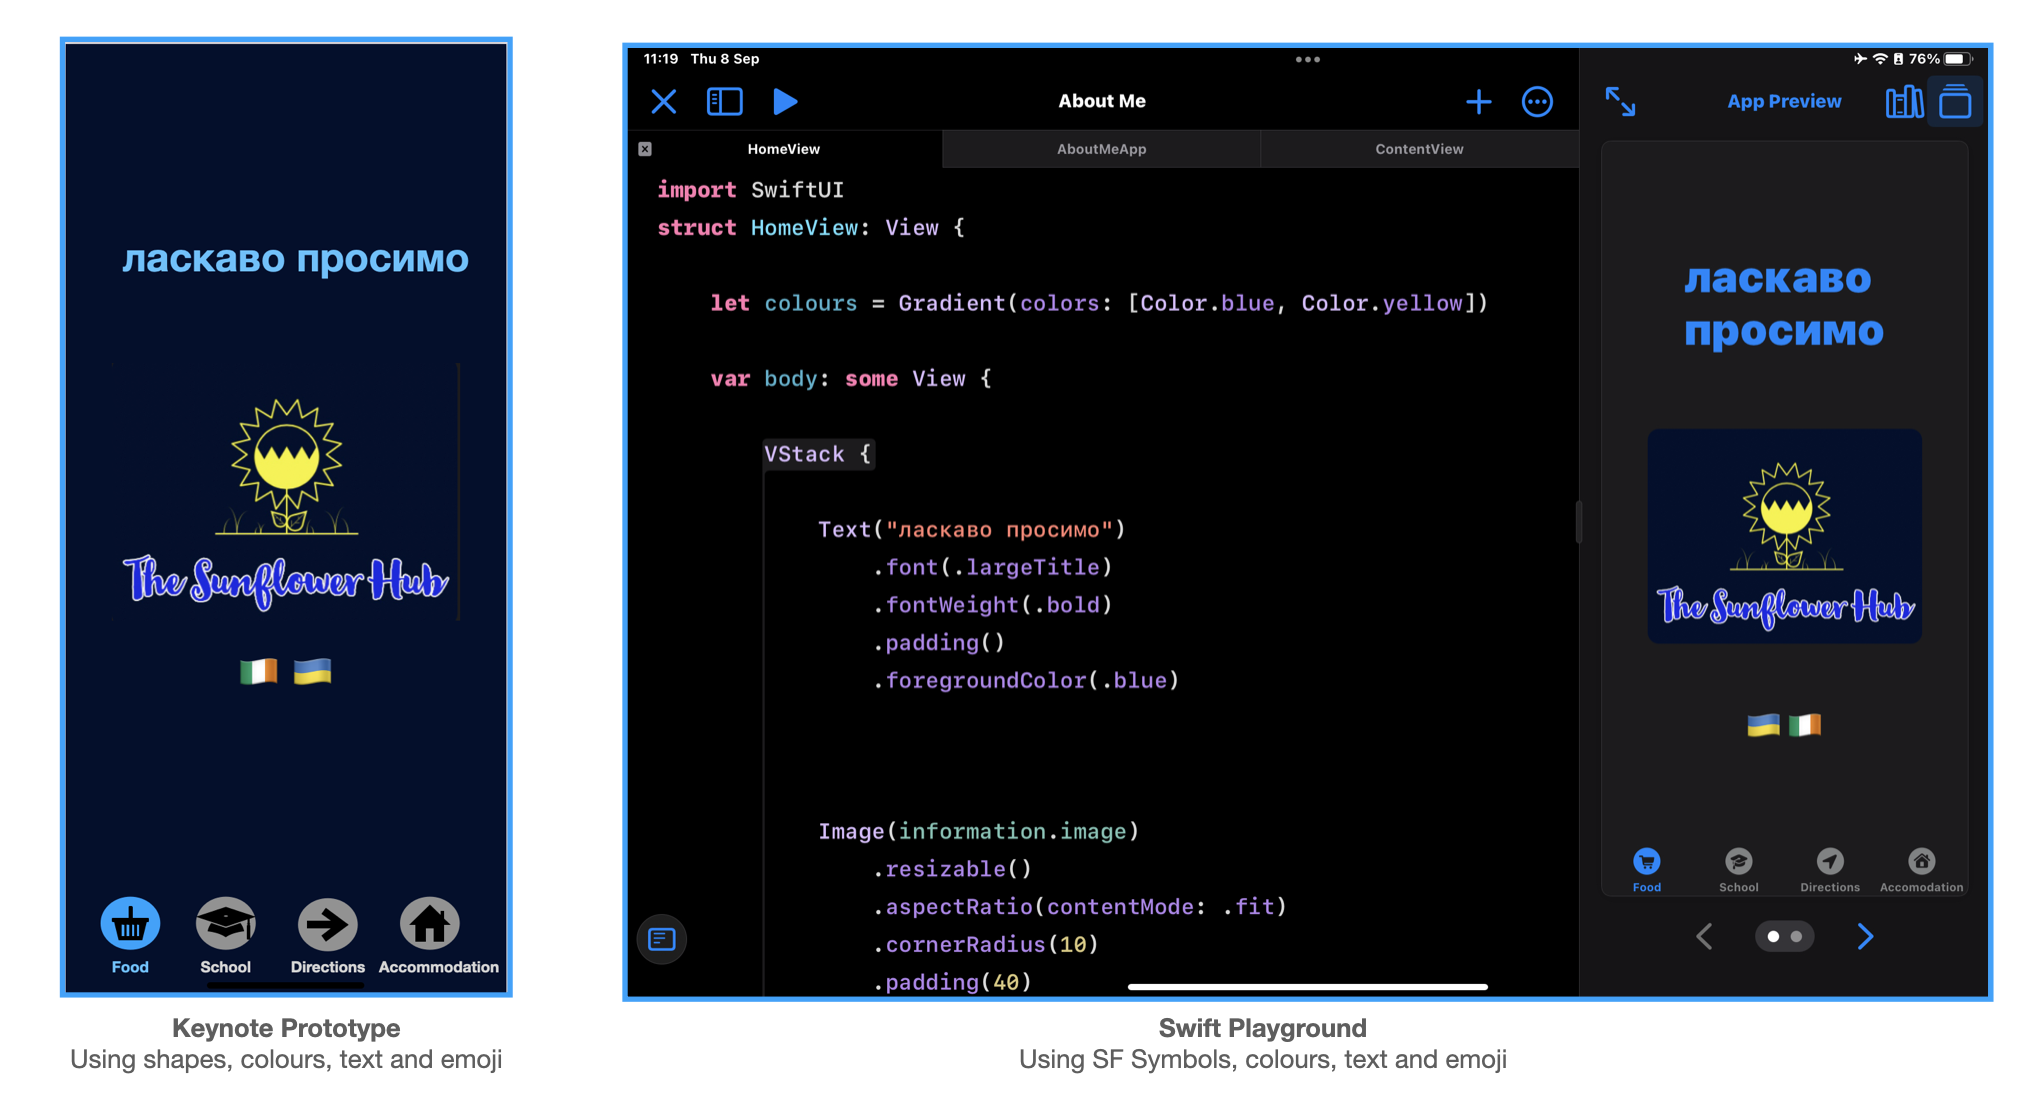 Screenshot comparing a keynote app prototype to a Swift UI prototype